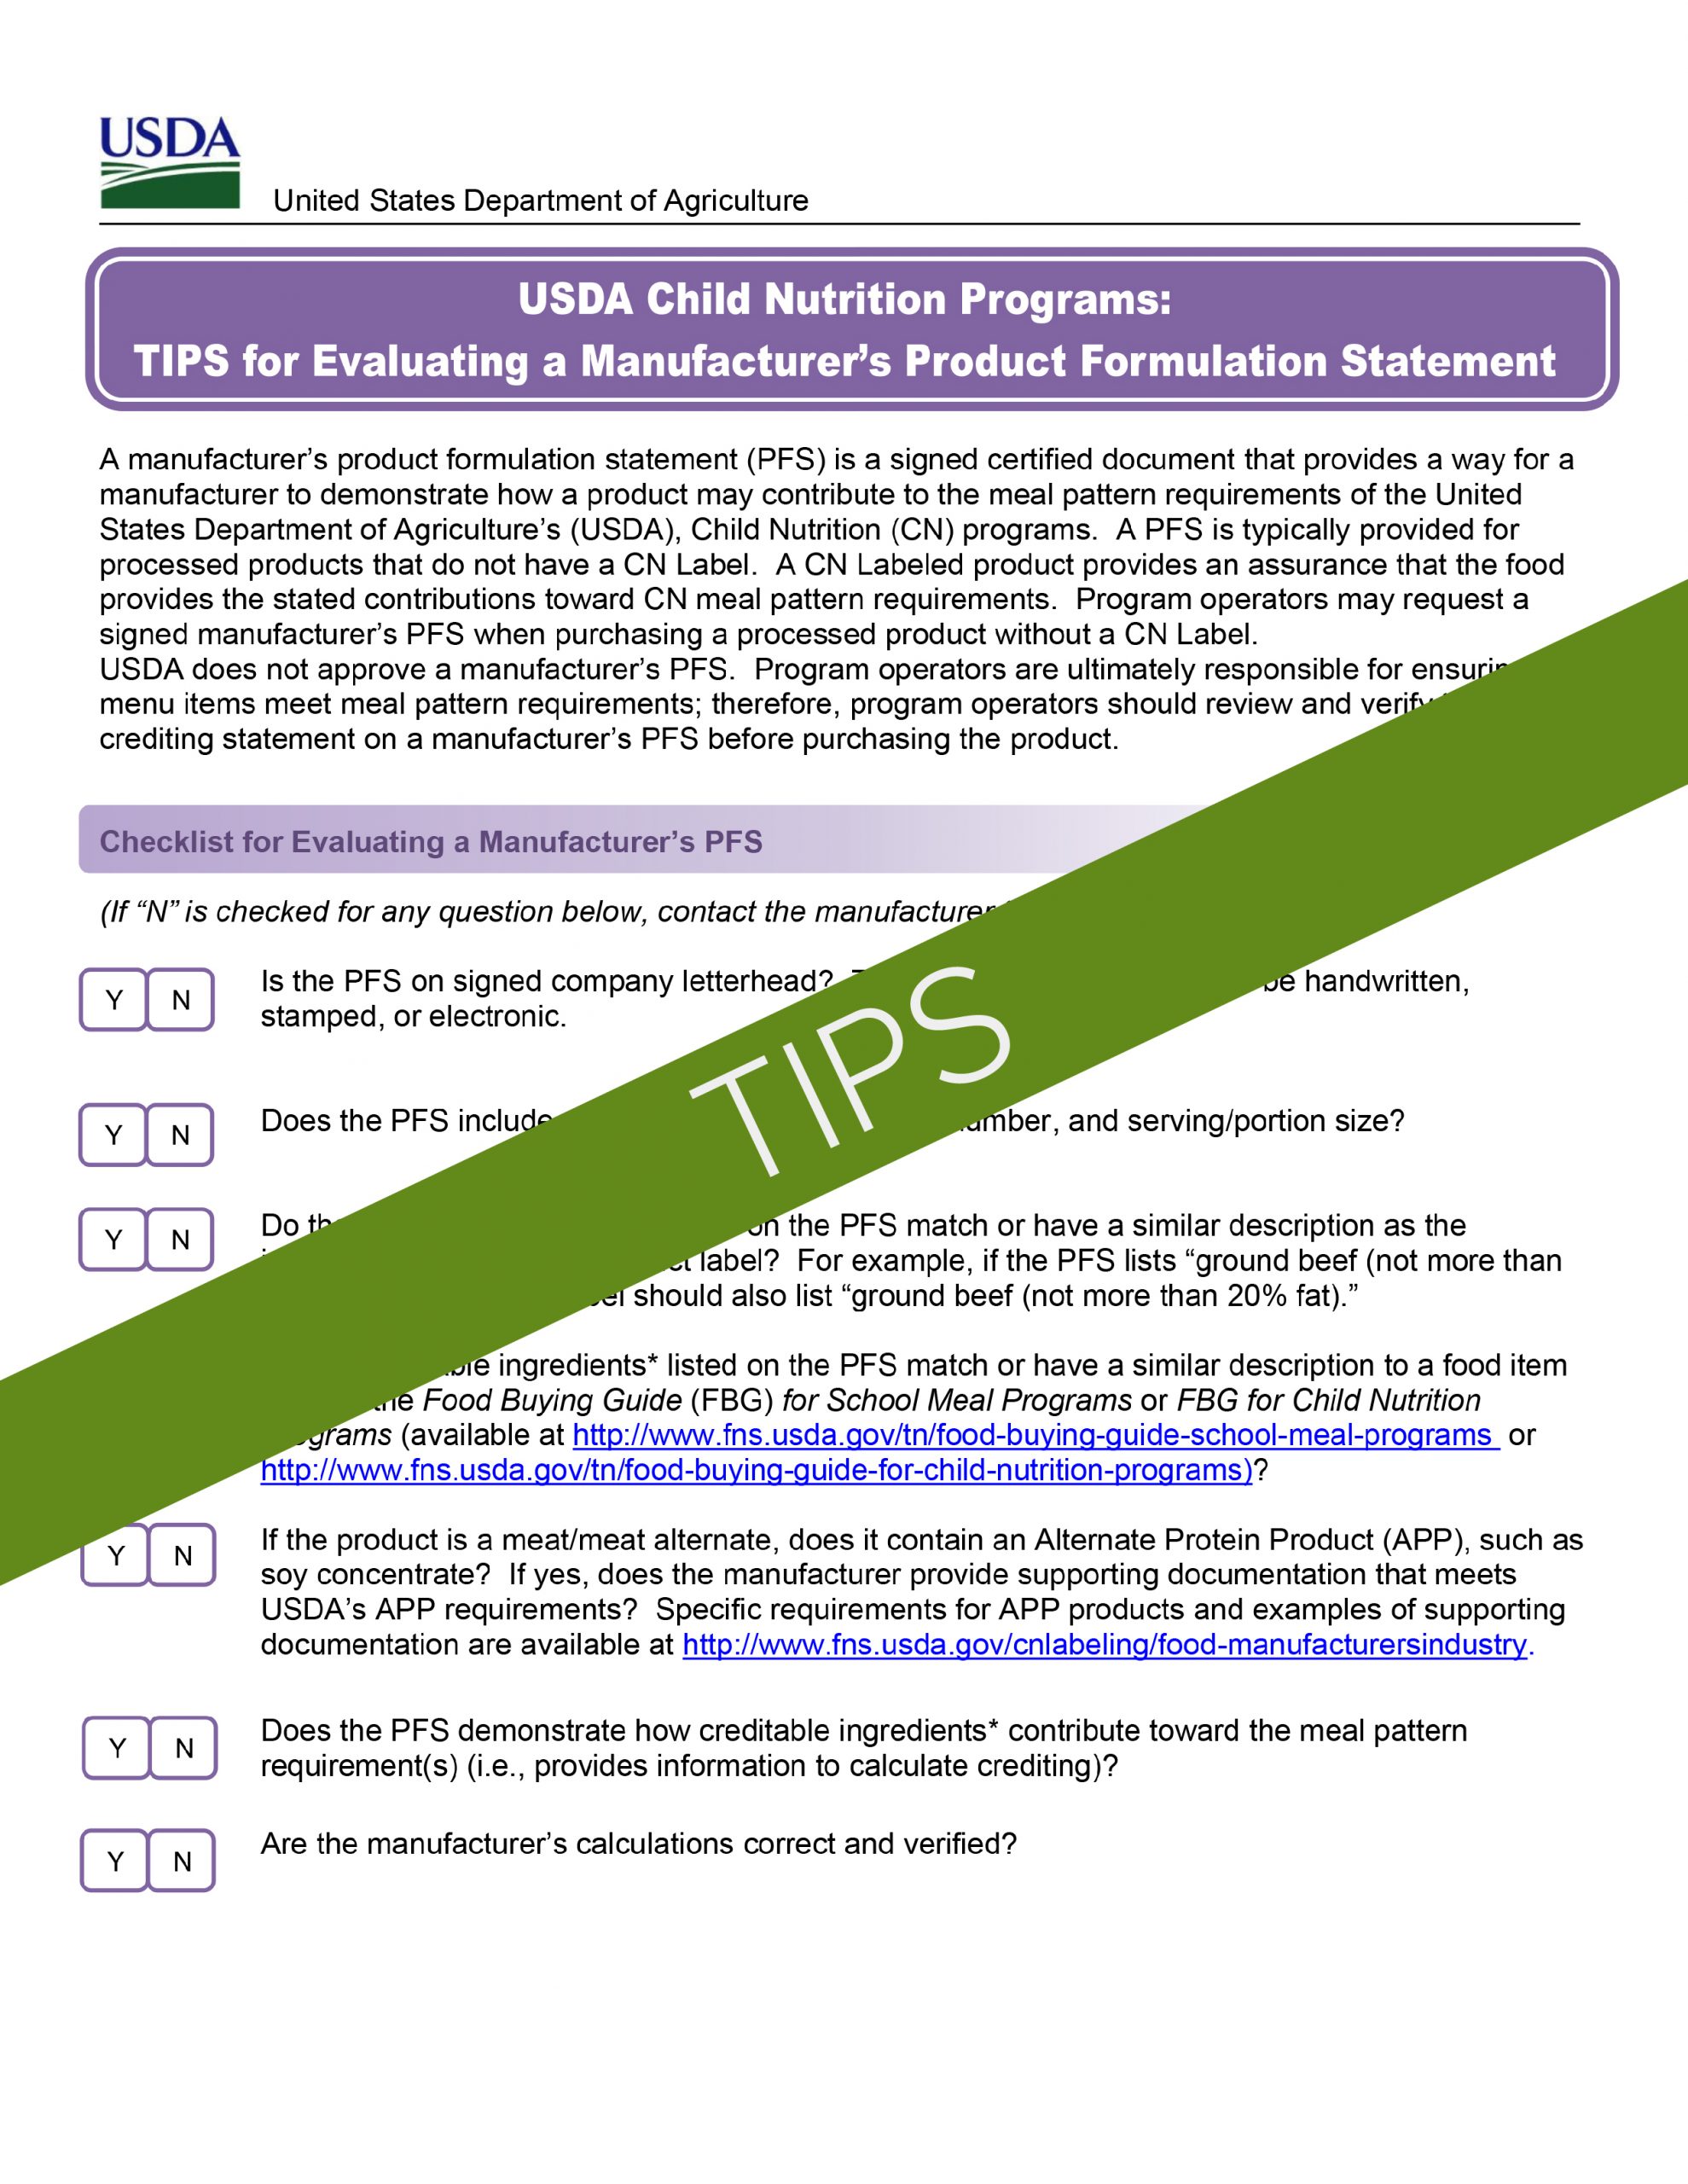 USDA Product Formulation Statement Tips Sheet